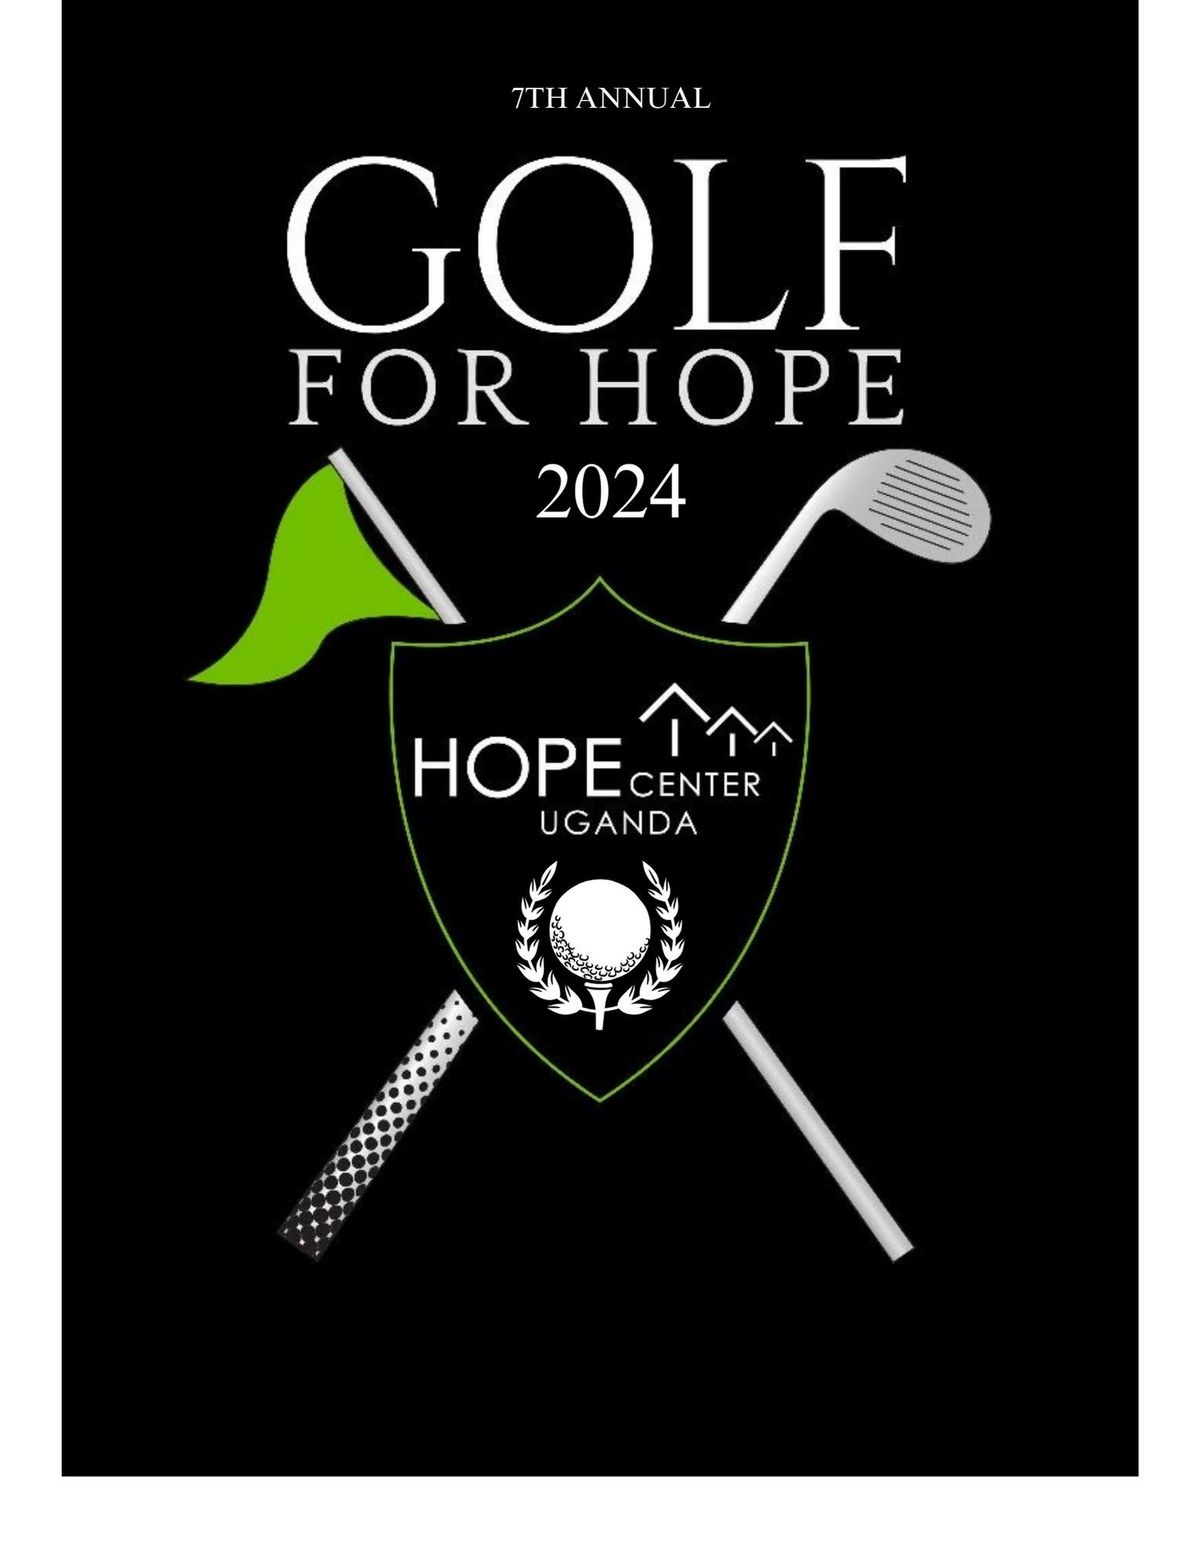 7th Annual Golf for Hope golf scramble